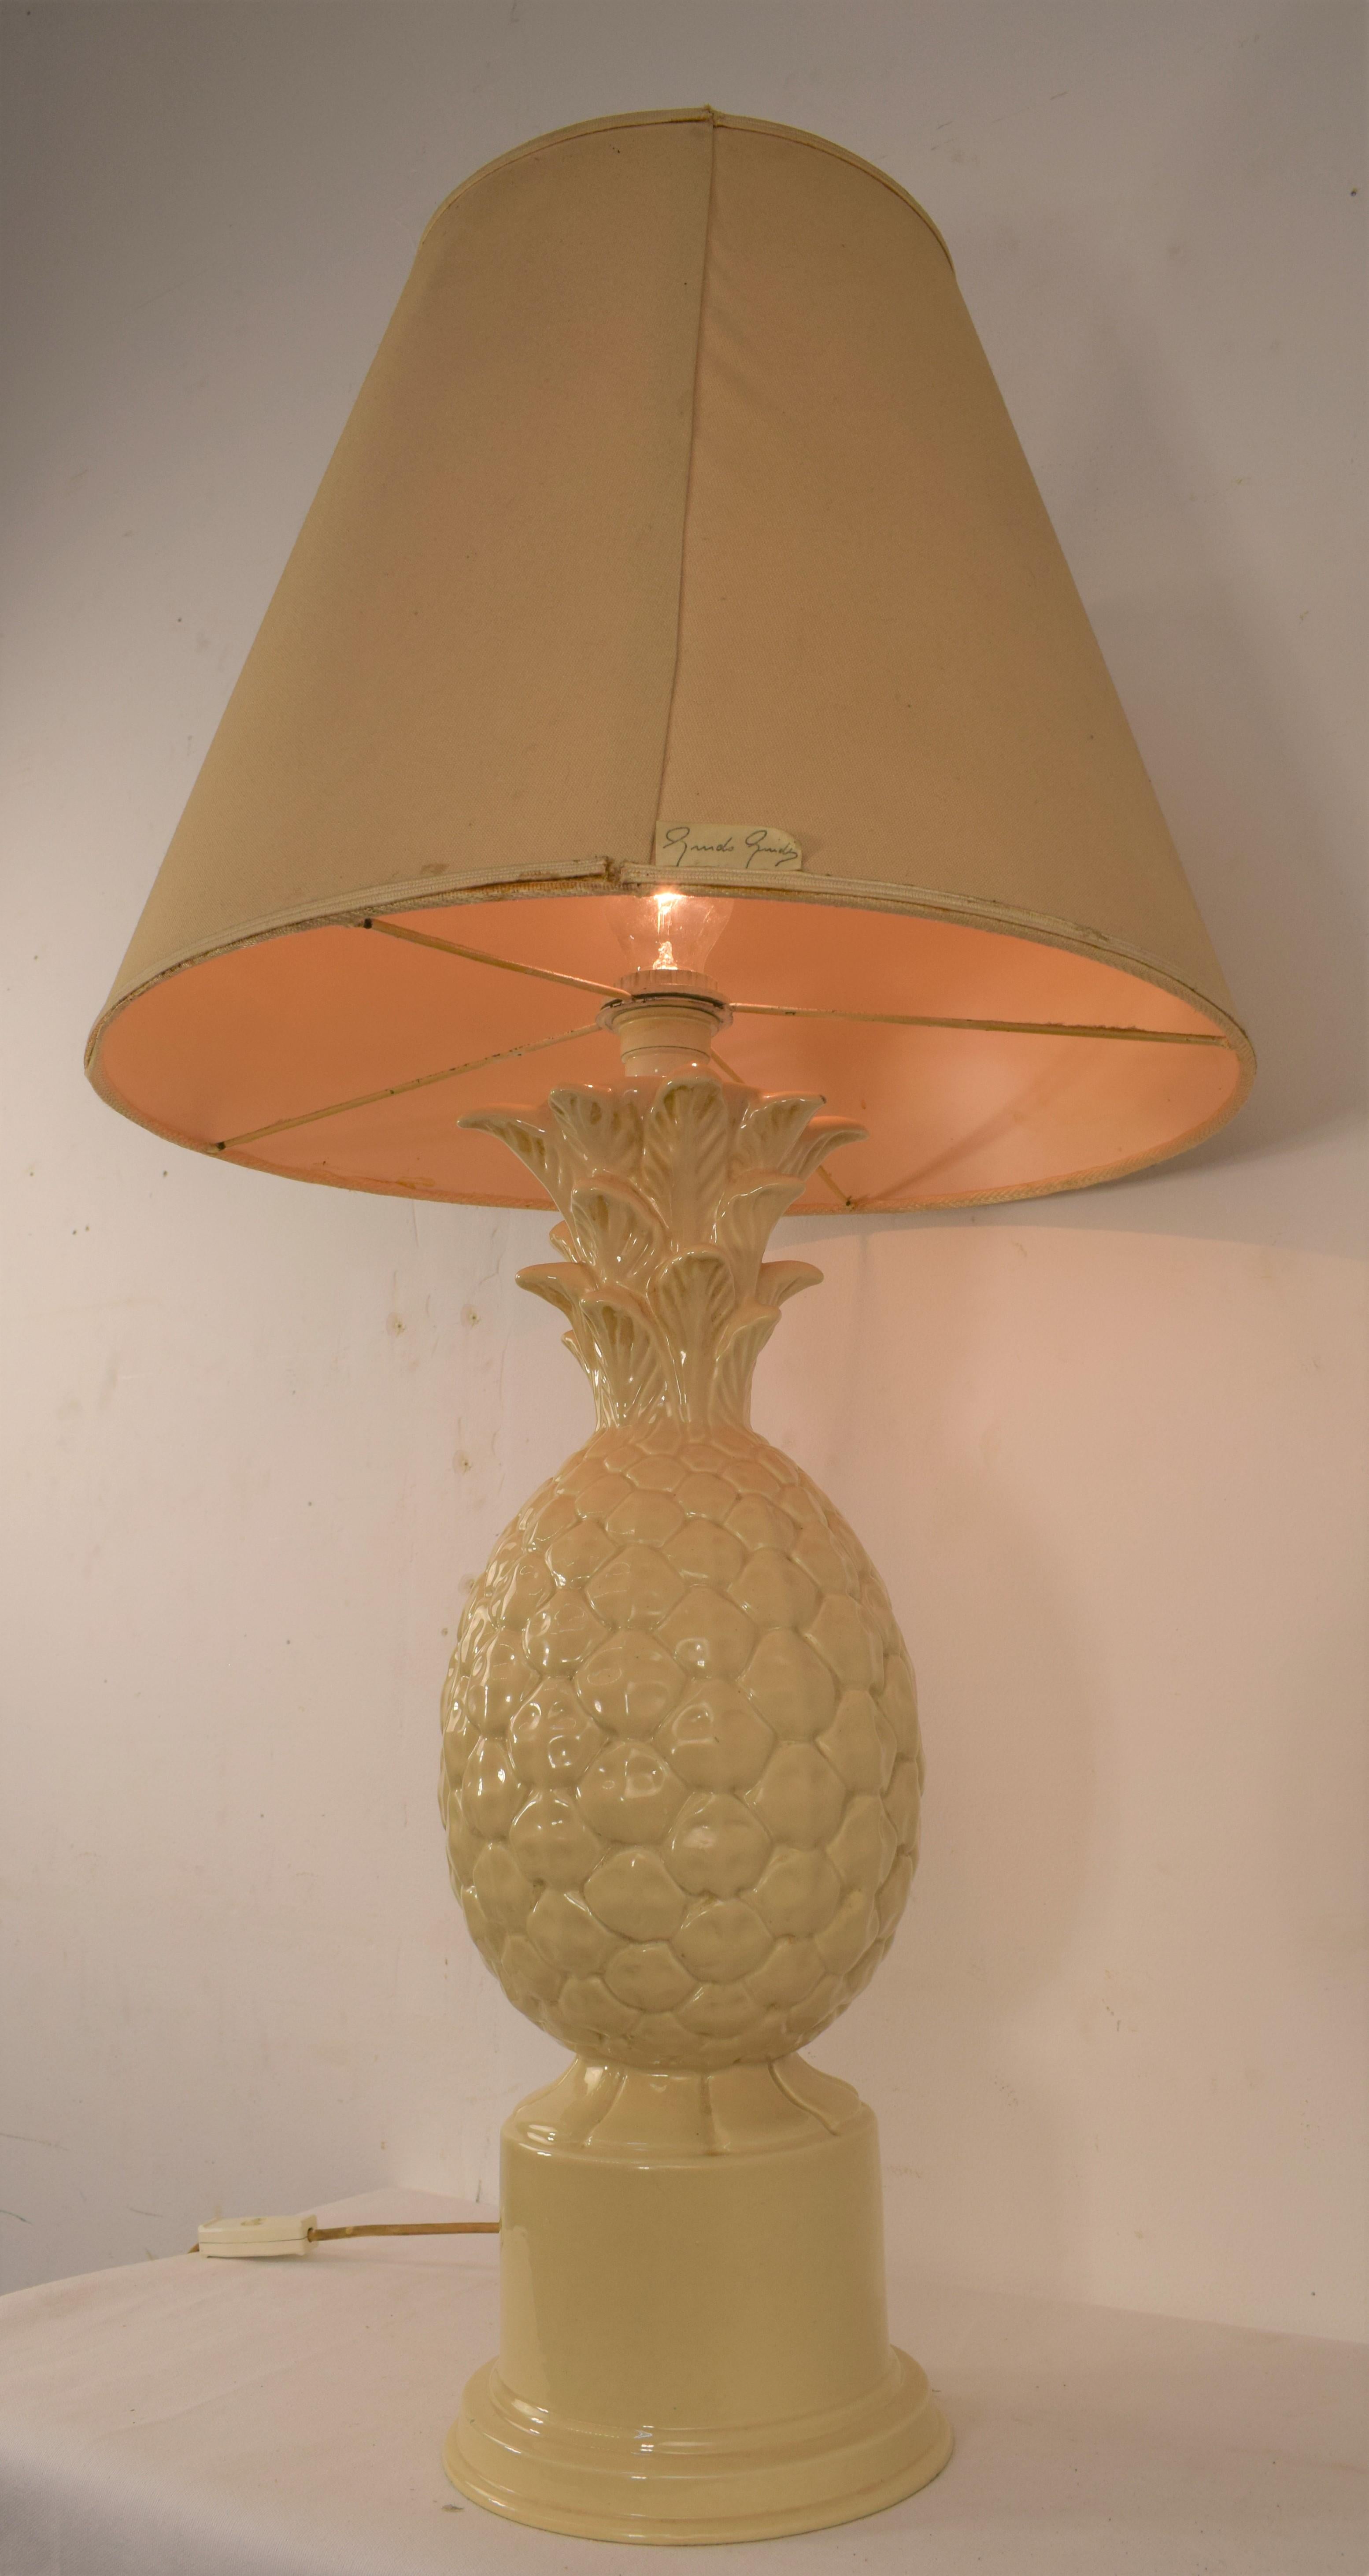 Italian ceramic table lamp, 1960s.
Dimensions: H= 90 cm; D= 50 cm
Lamp only : H=52 cm; D=20 cm.